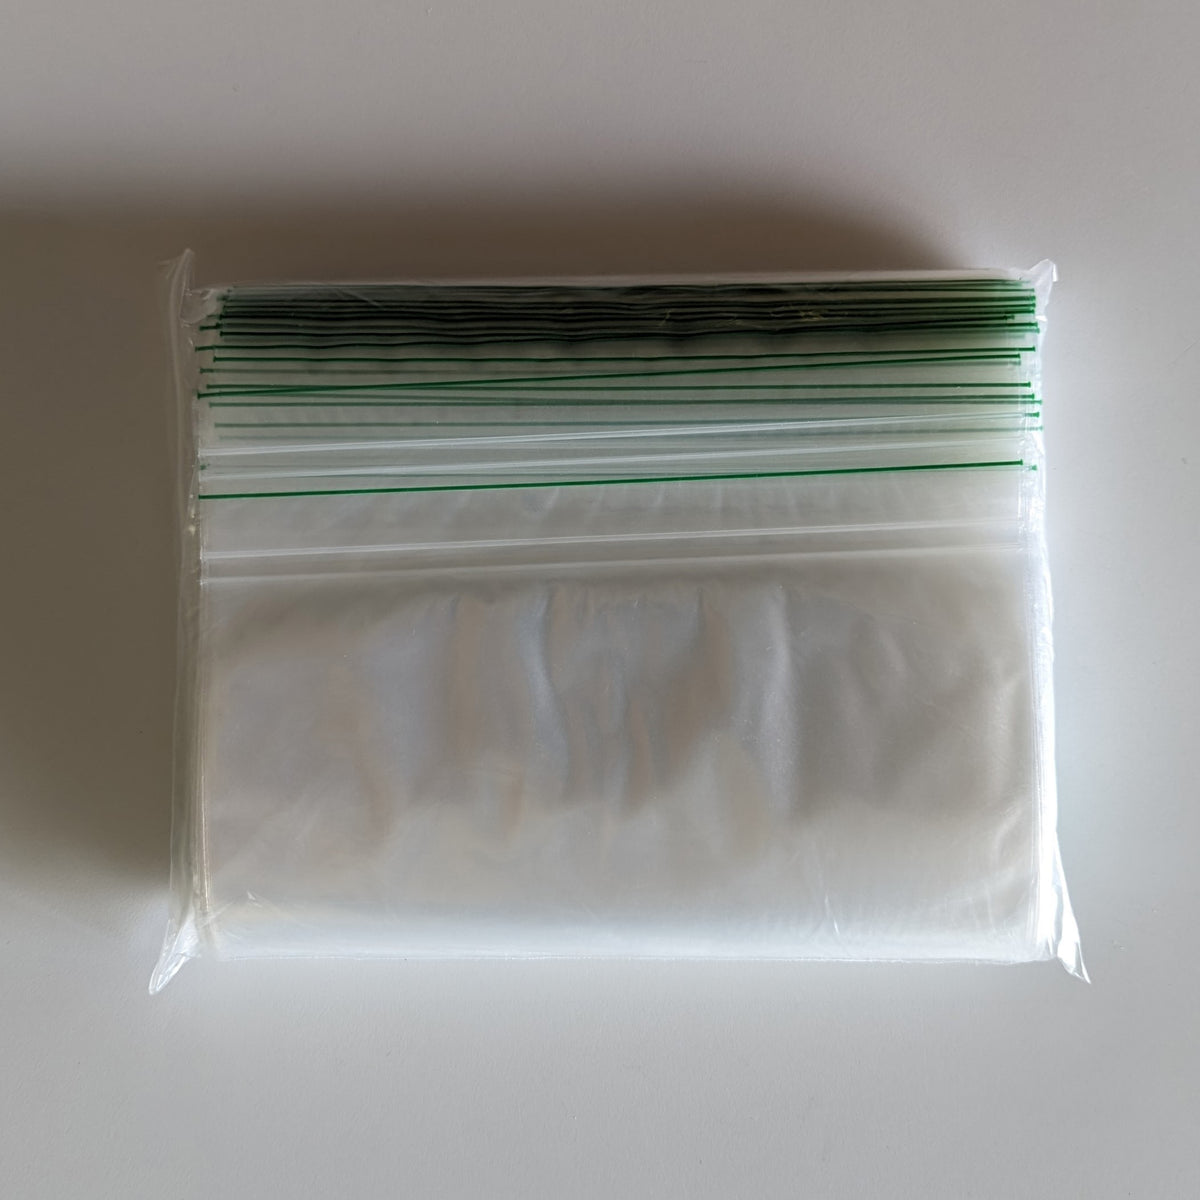 Gallon Size Clear Landfill-Biodegradable Plastic Ziplock Bags 3